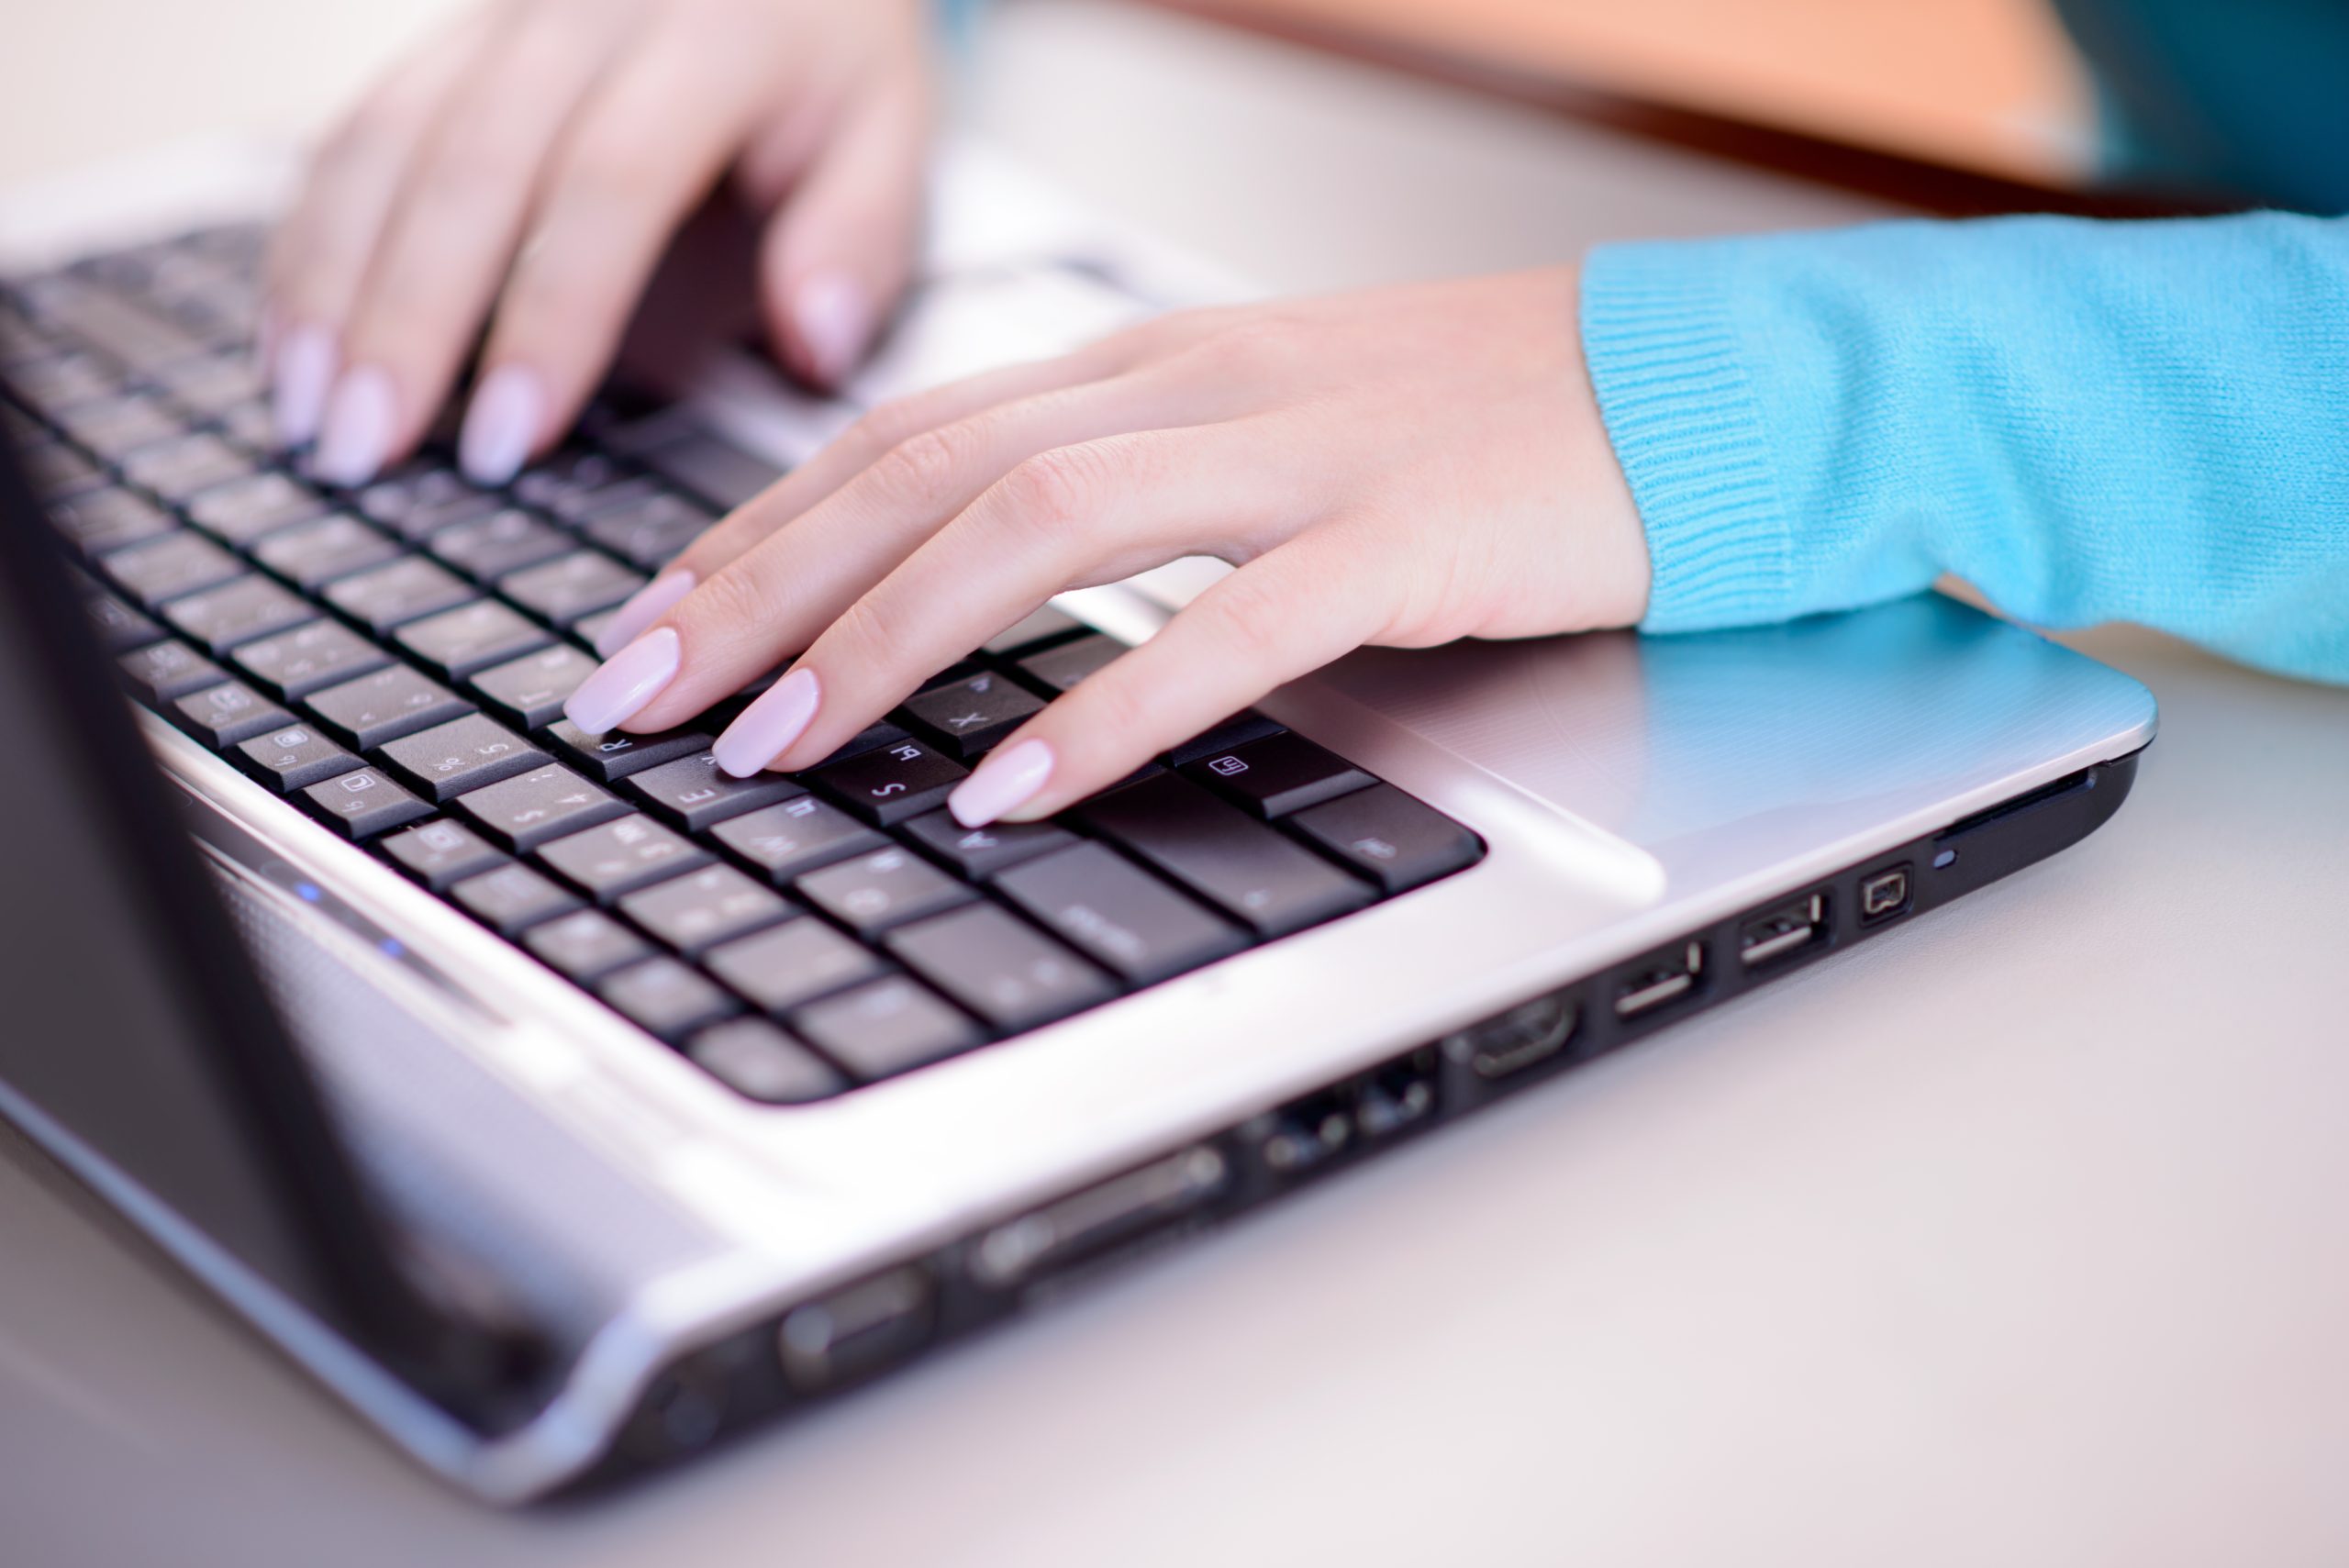 Печатать на ноуте. Ноутбук руки. Клавиатура компьютера с руками. Руки на клавиатуре. Женские руки с ноутбуком.